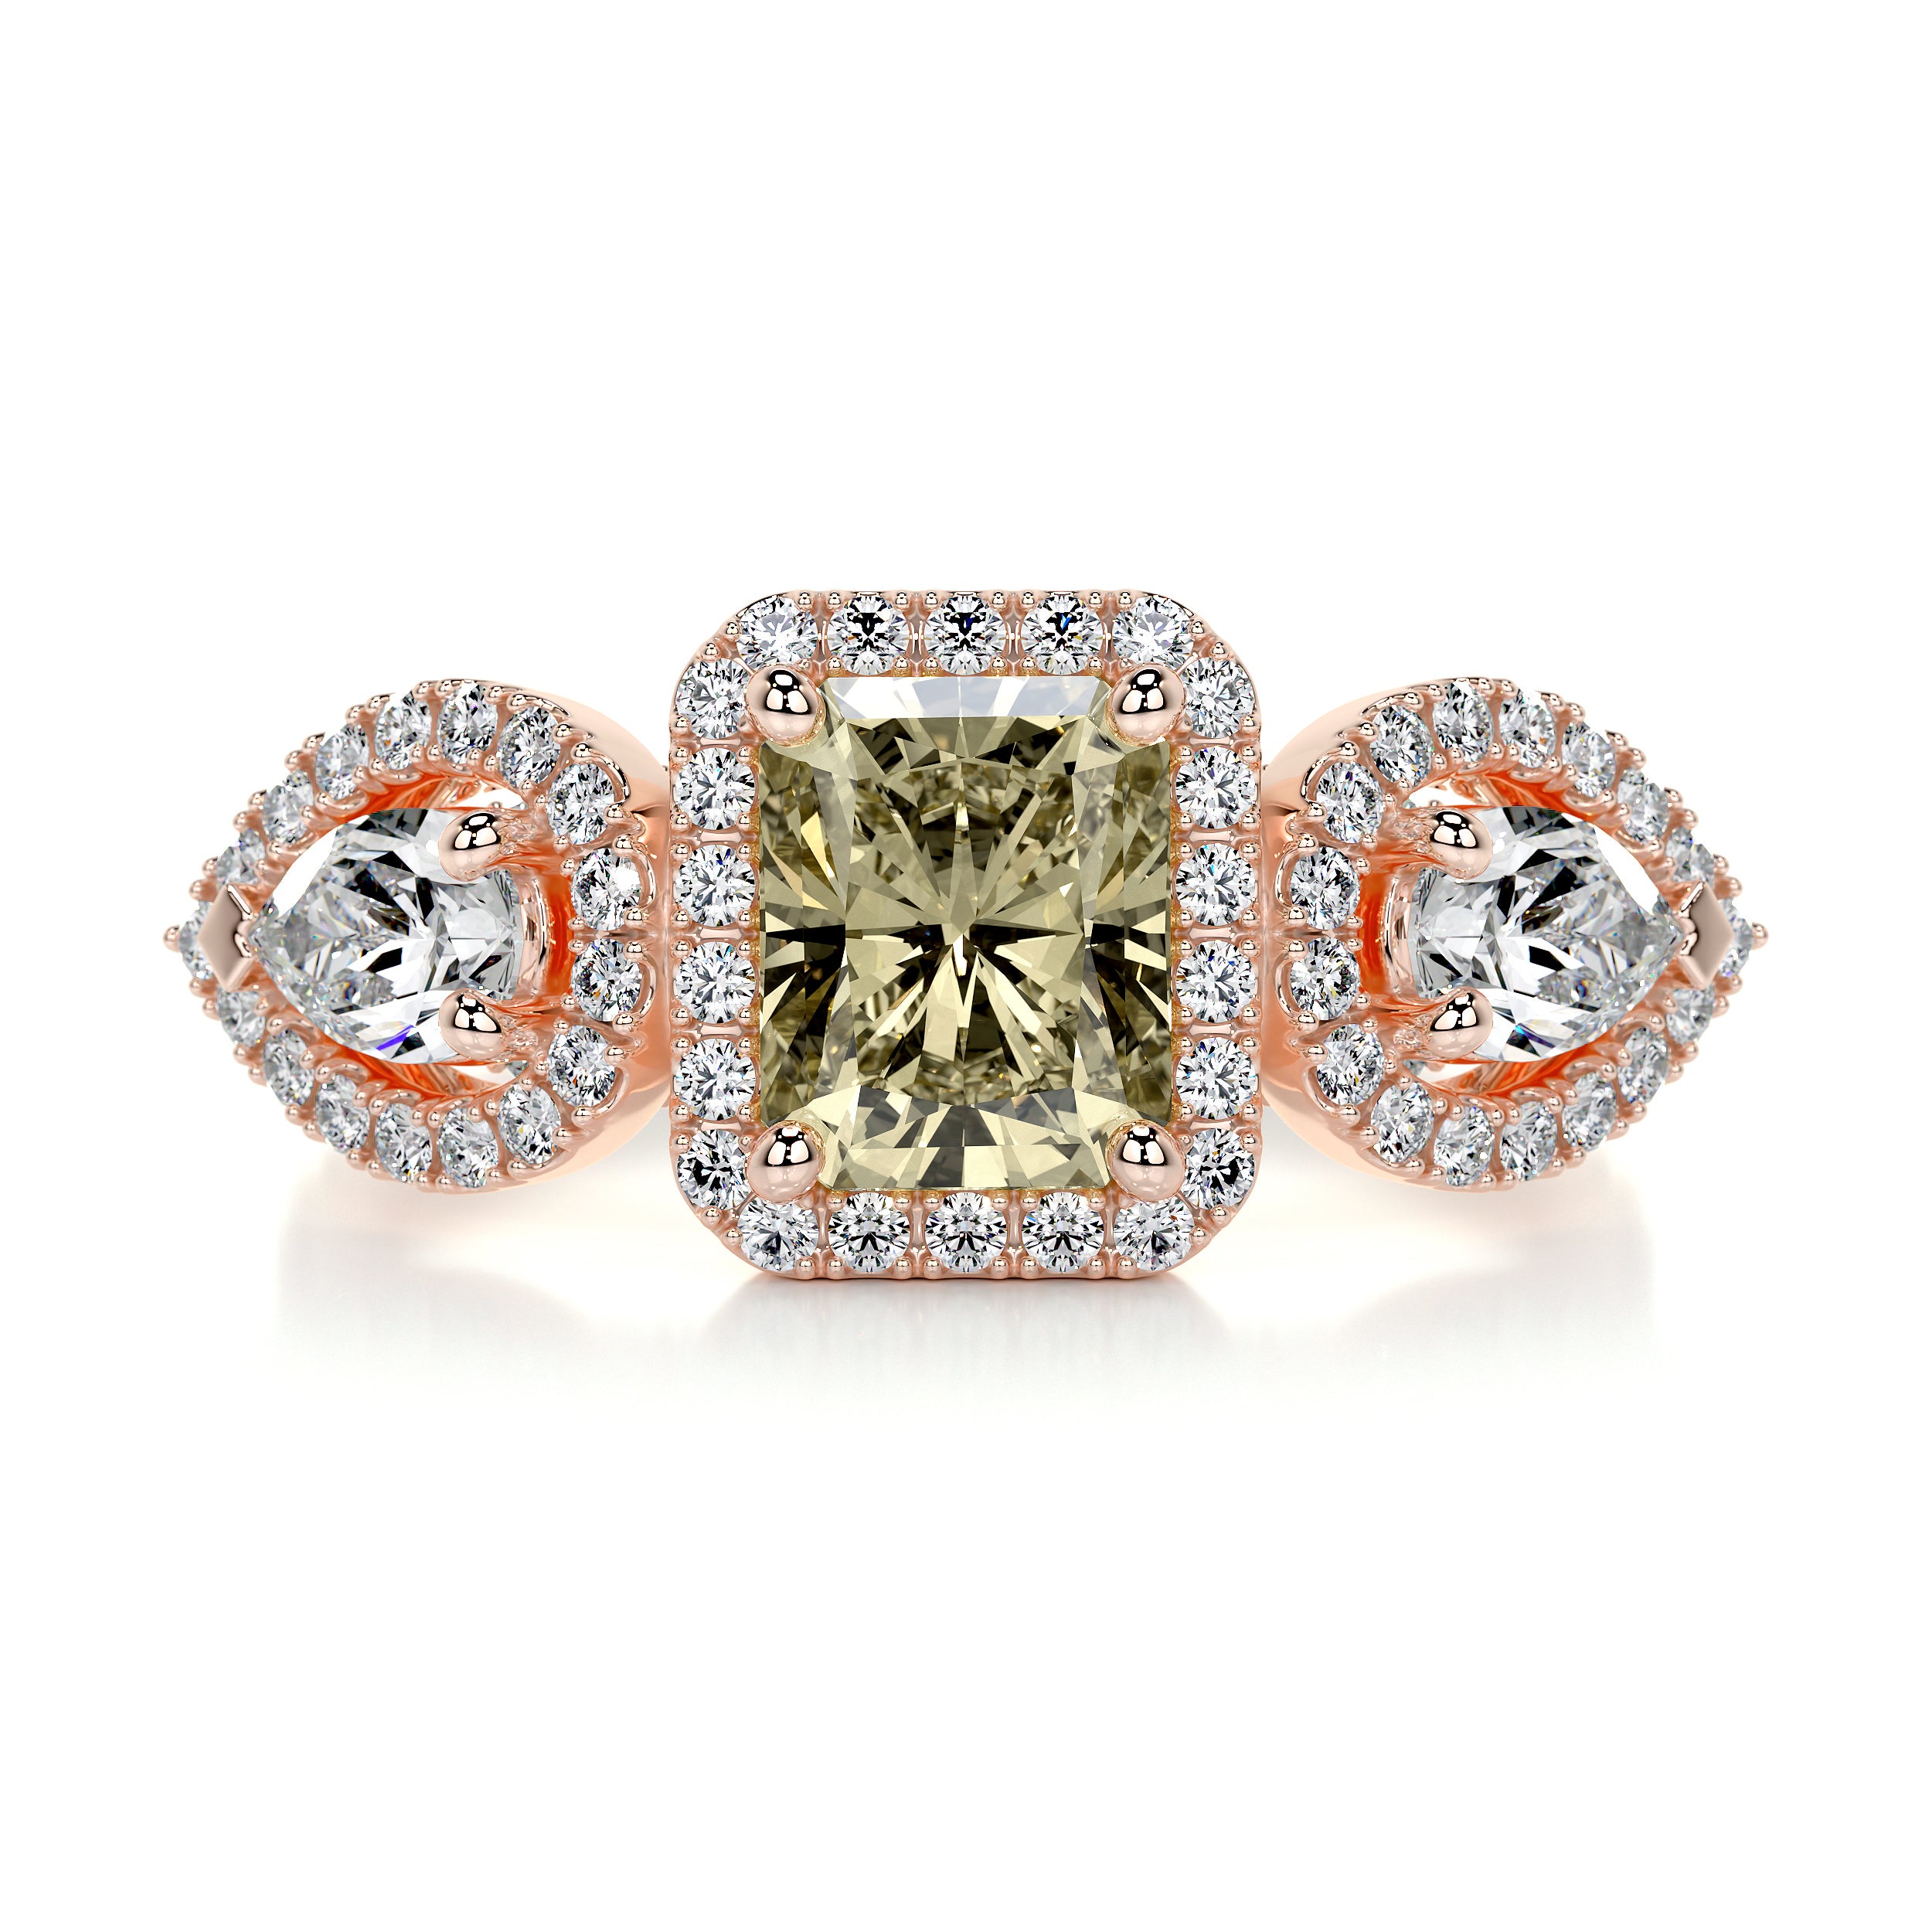 Violet Diamond Engagement Ring - 14K Rose Gold